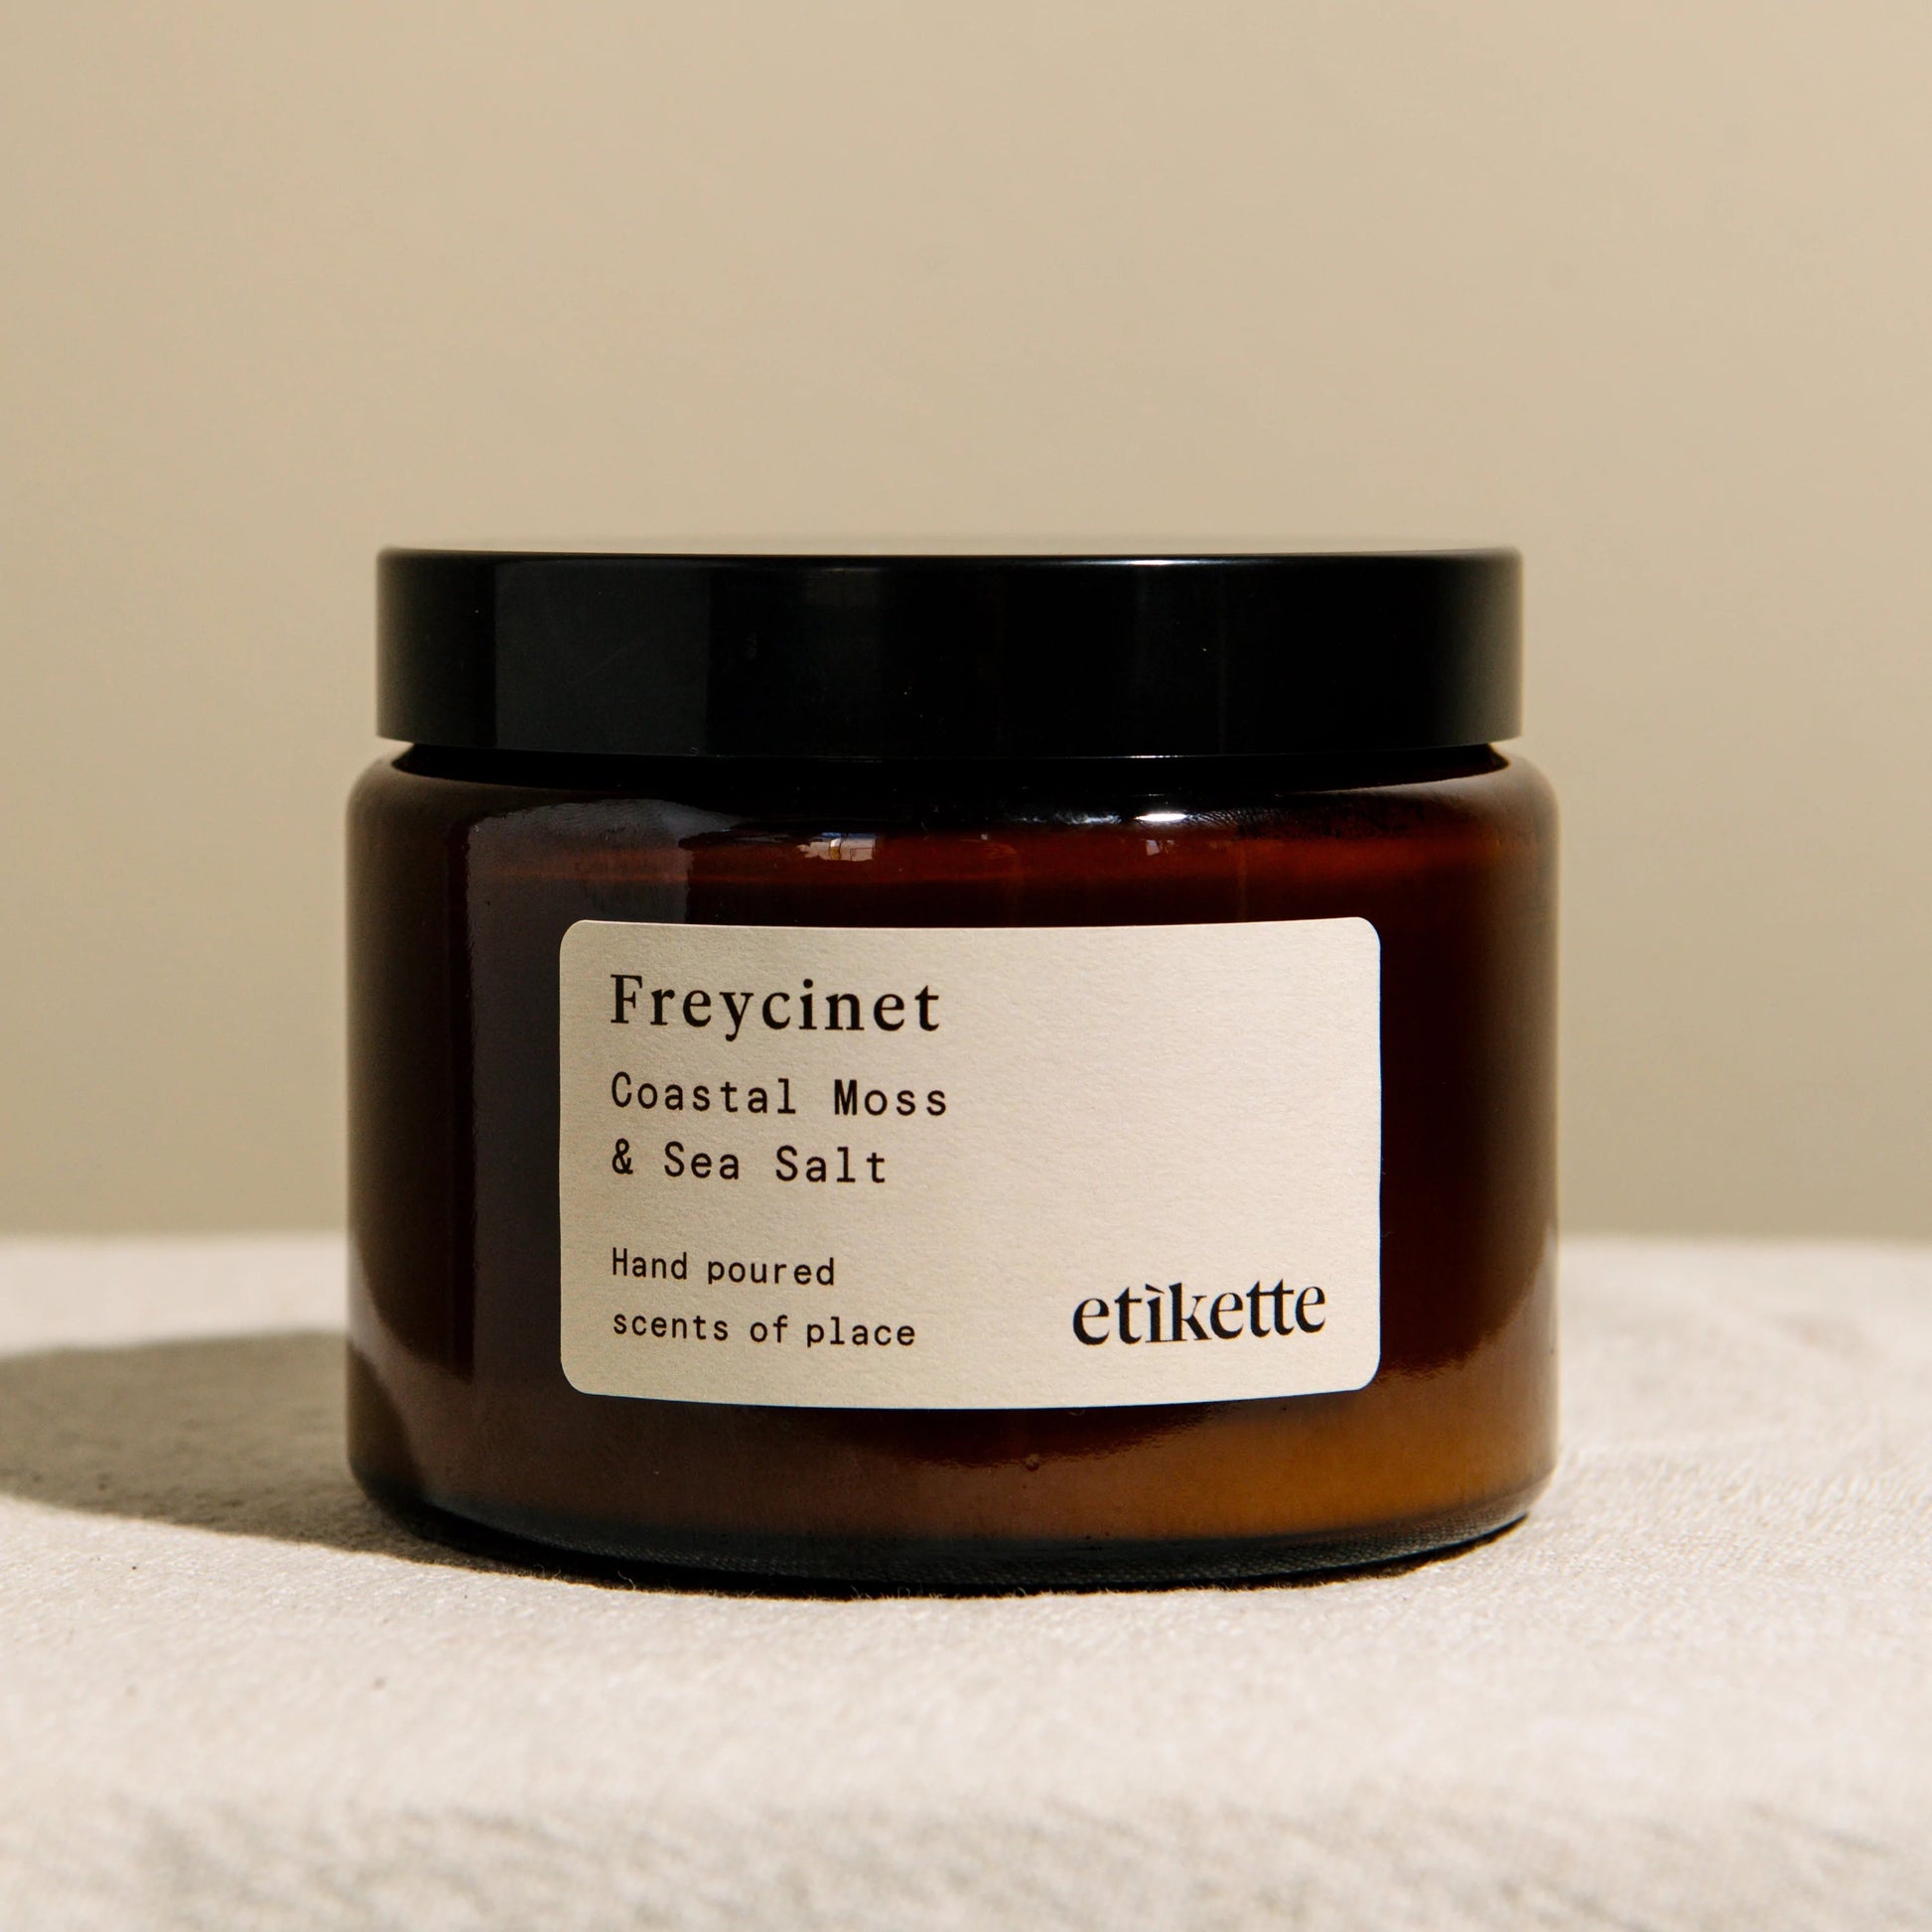 Freycinet Coastal Moss and Sea Salt Double Wick Candle by Etikette - Toast and honey studio